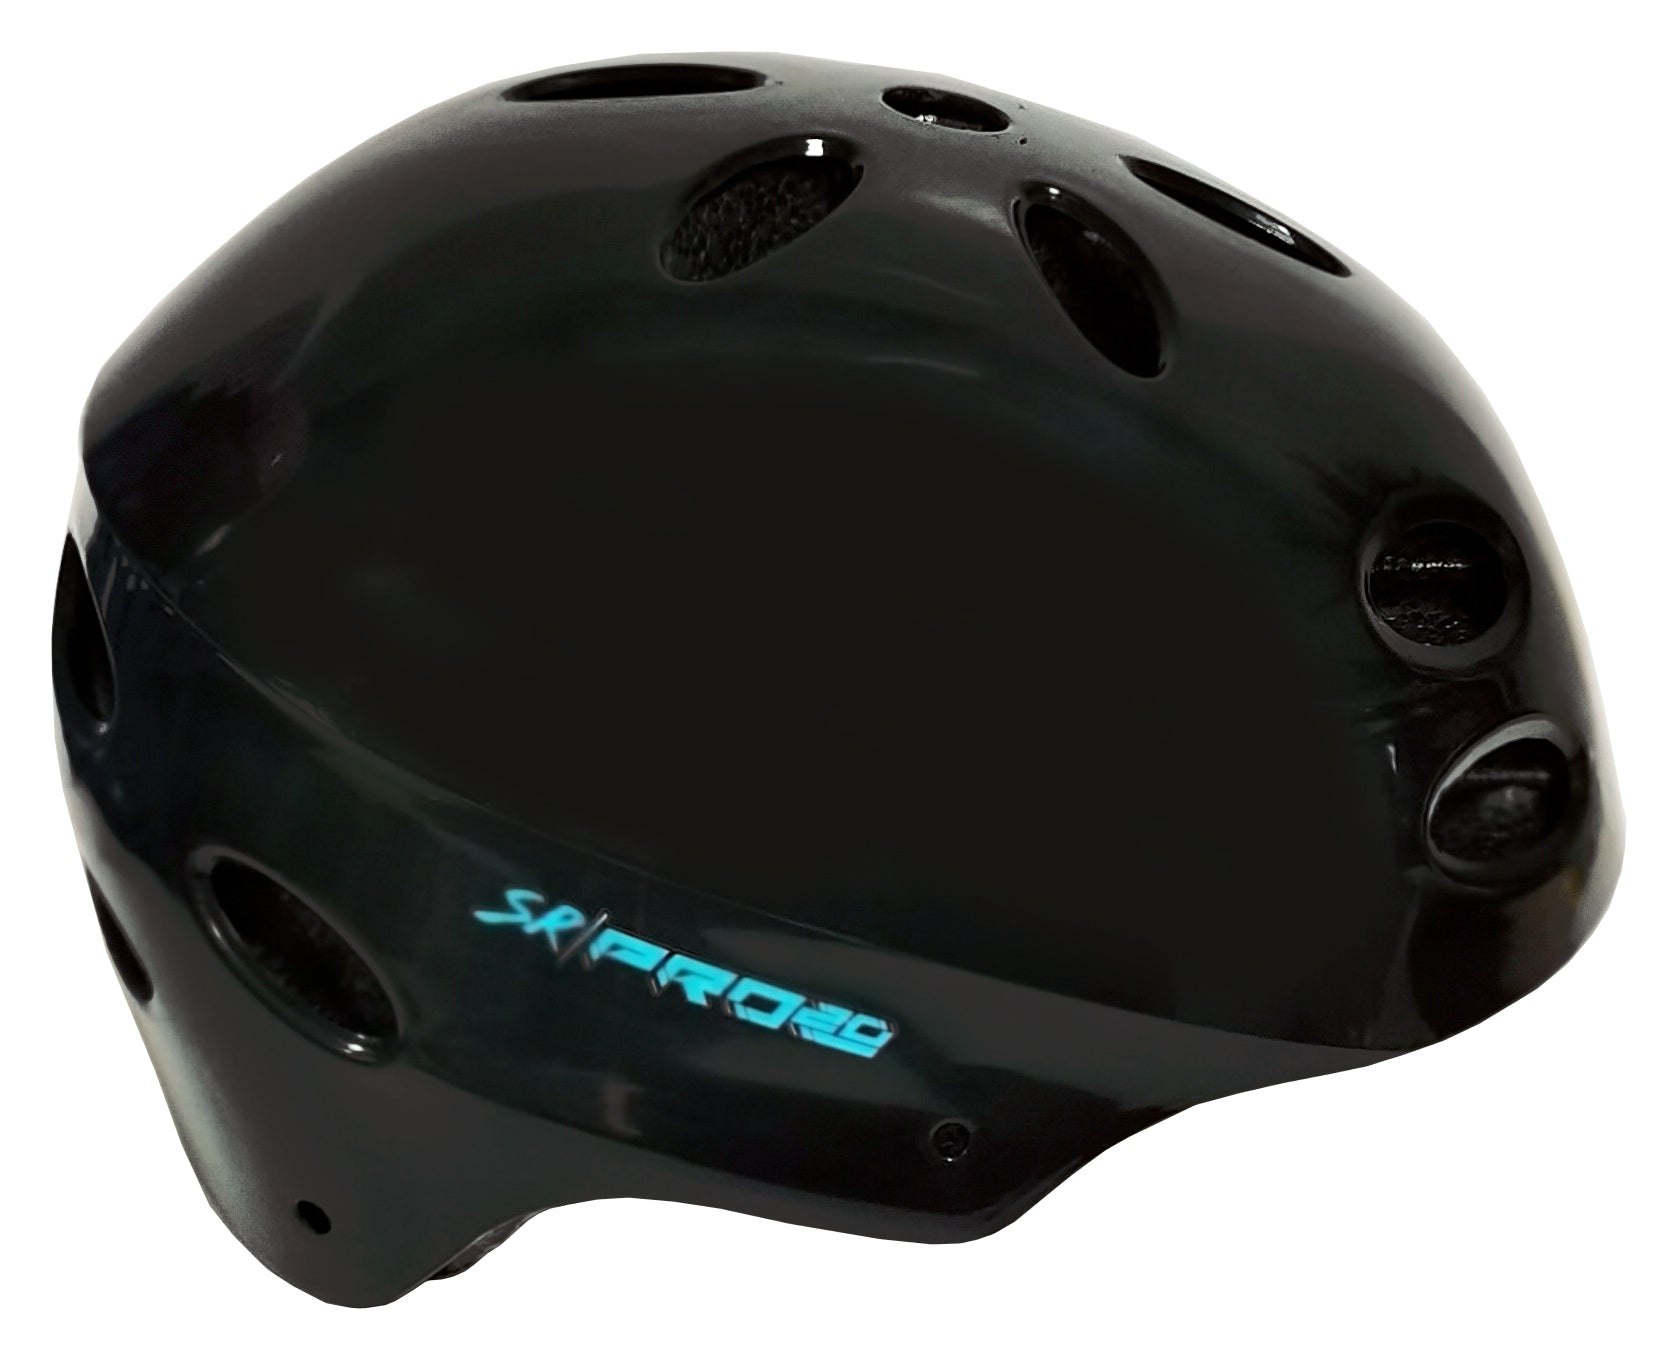 20" SR Pro Bike with Helmet